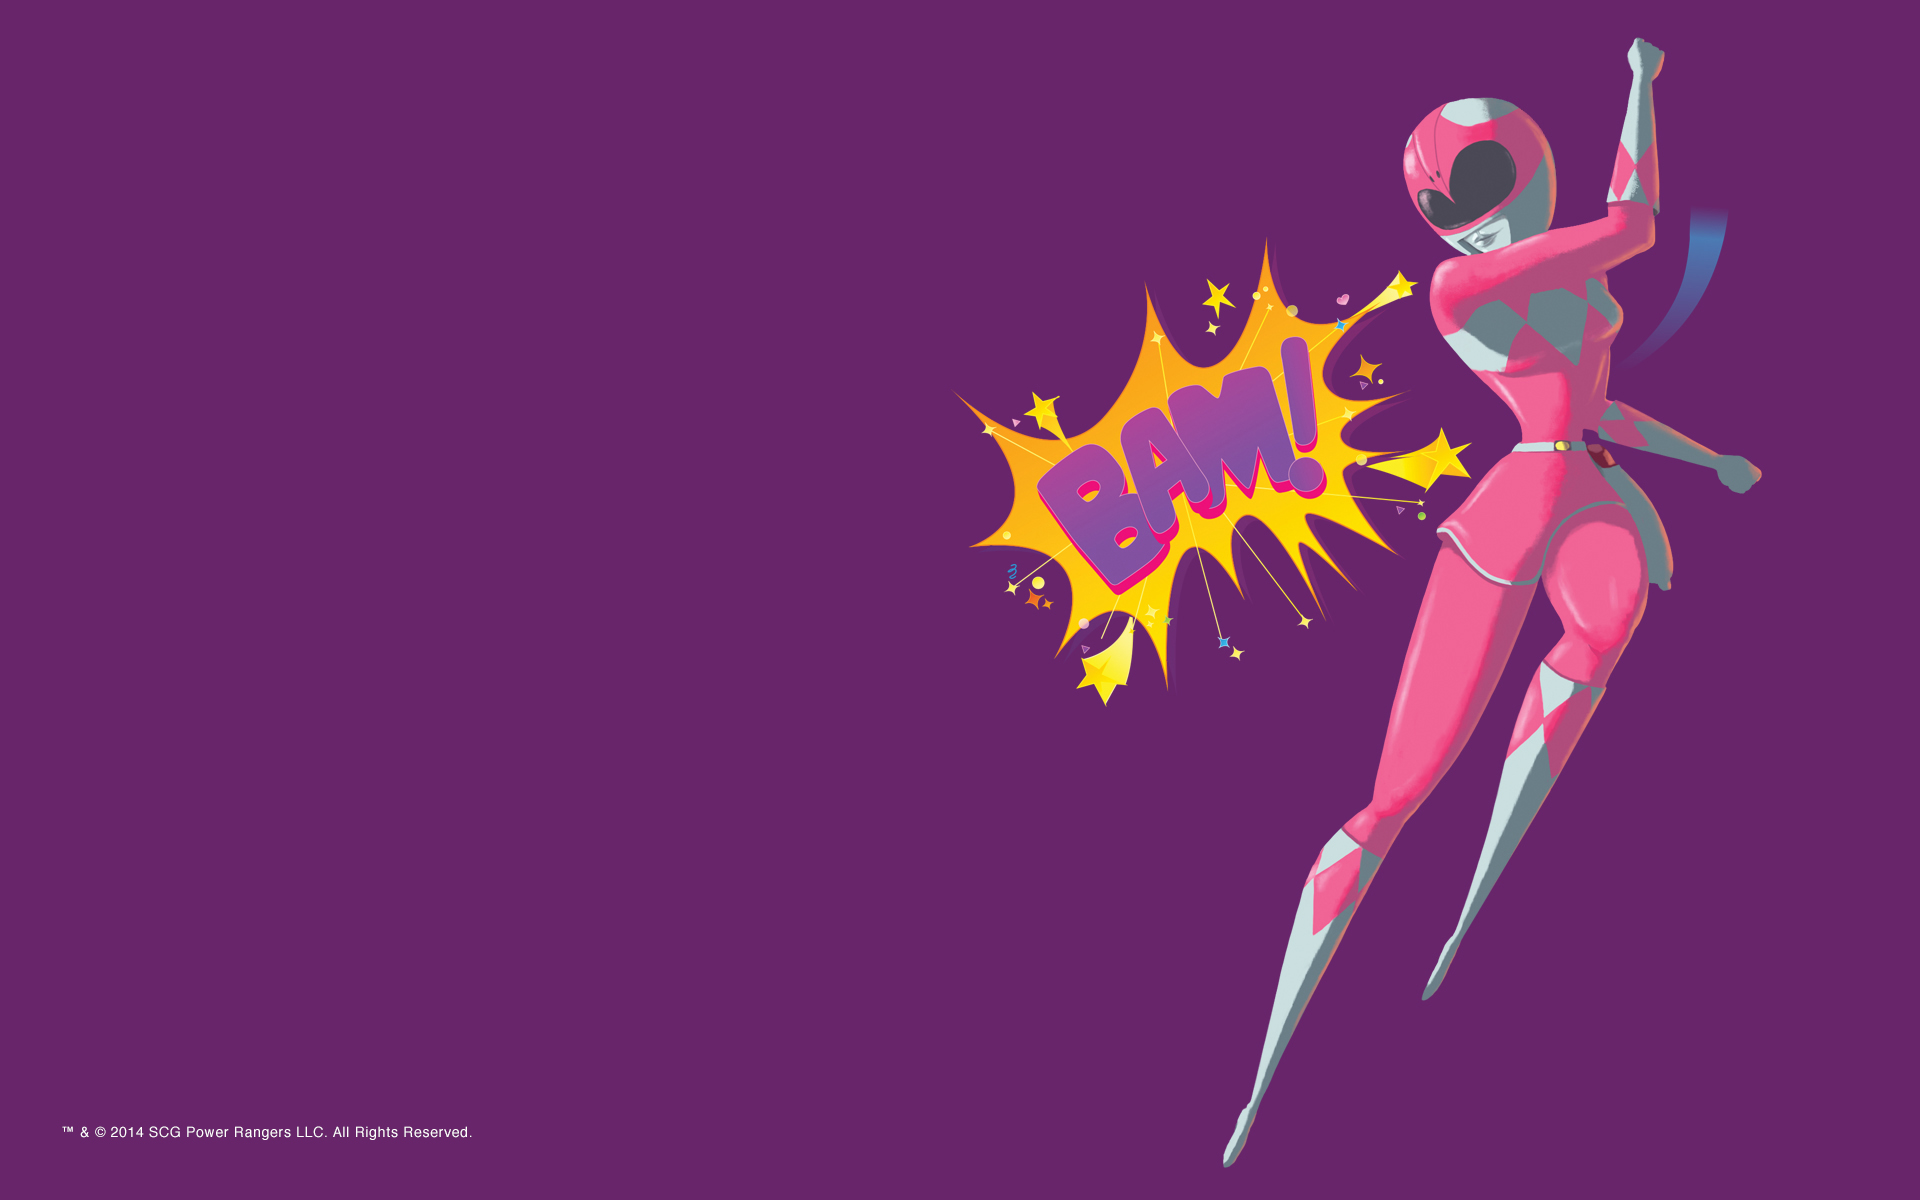 Go Pink Wallpaper Fun Desktop For Kids Power Rangers